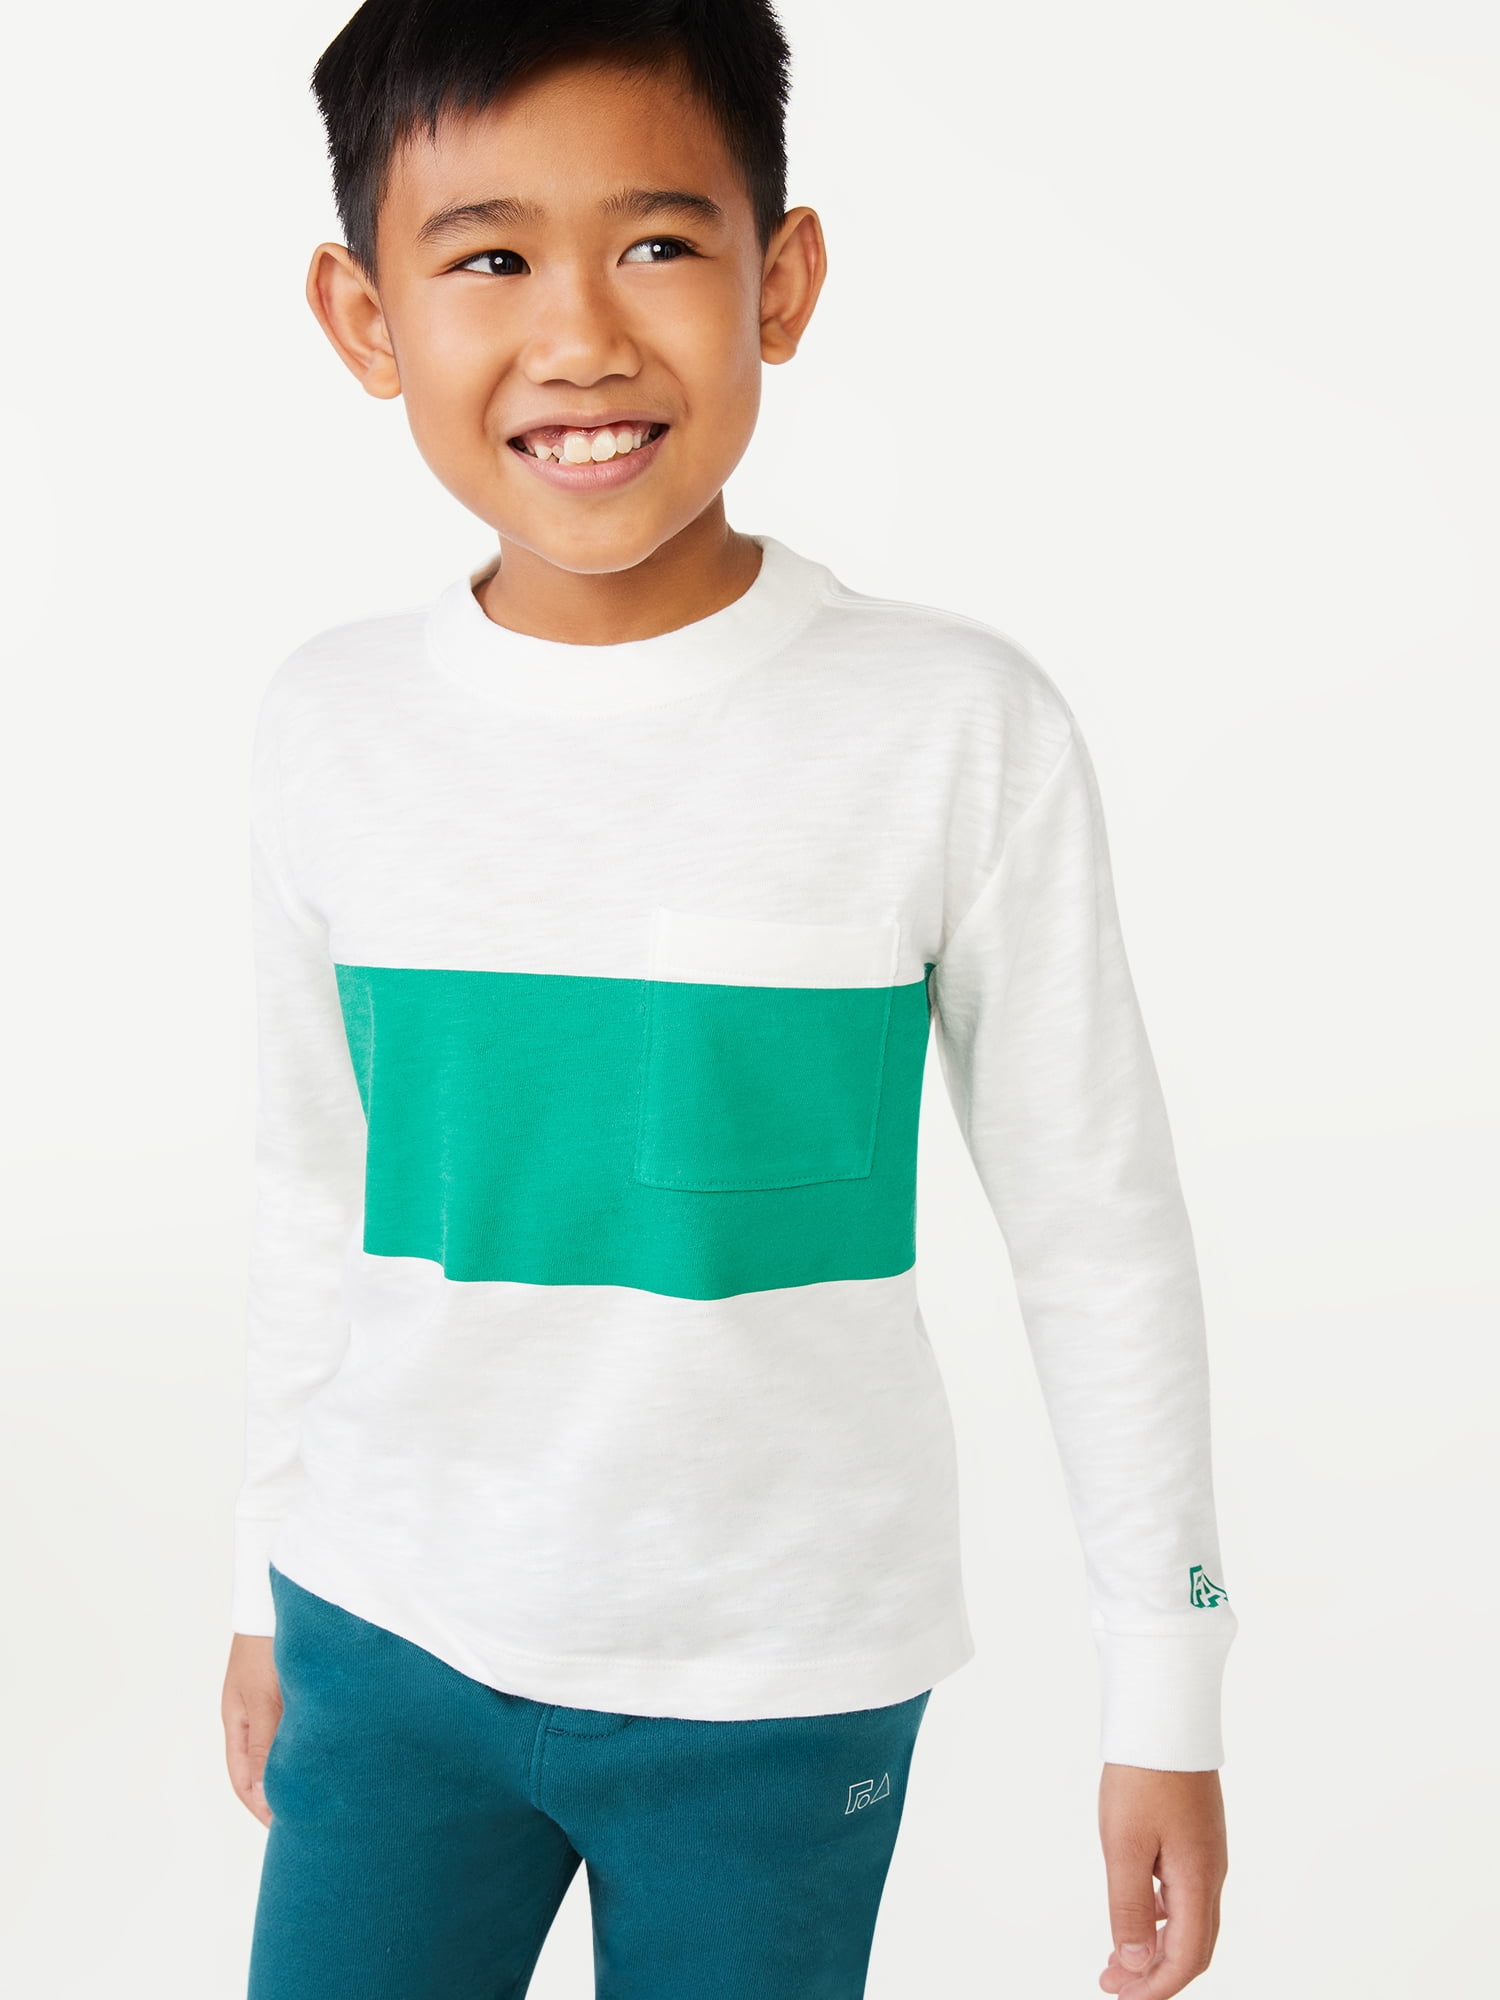 Boys White/Blue/Green Stripe Long Sleeved T Shirt size 2-3 years 